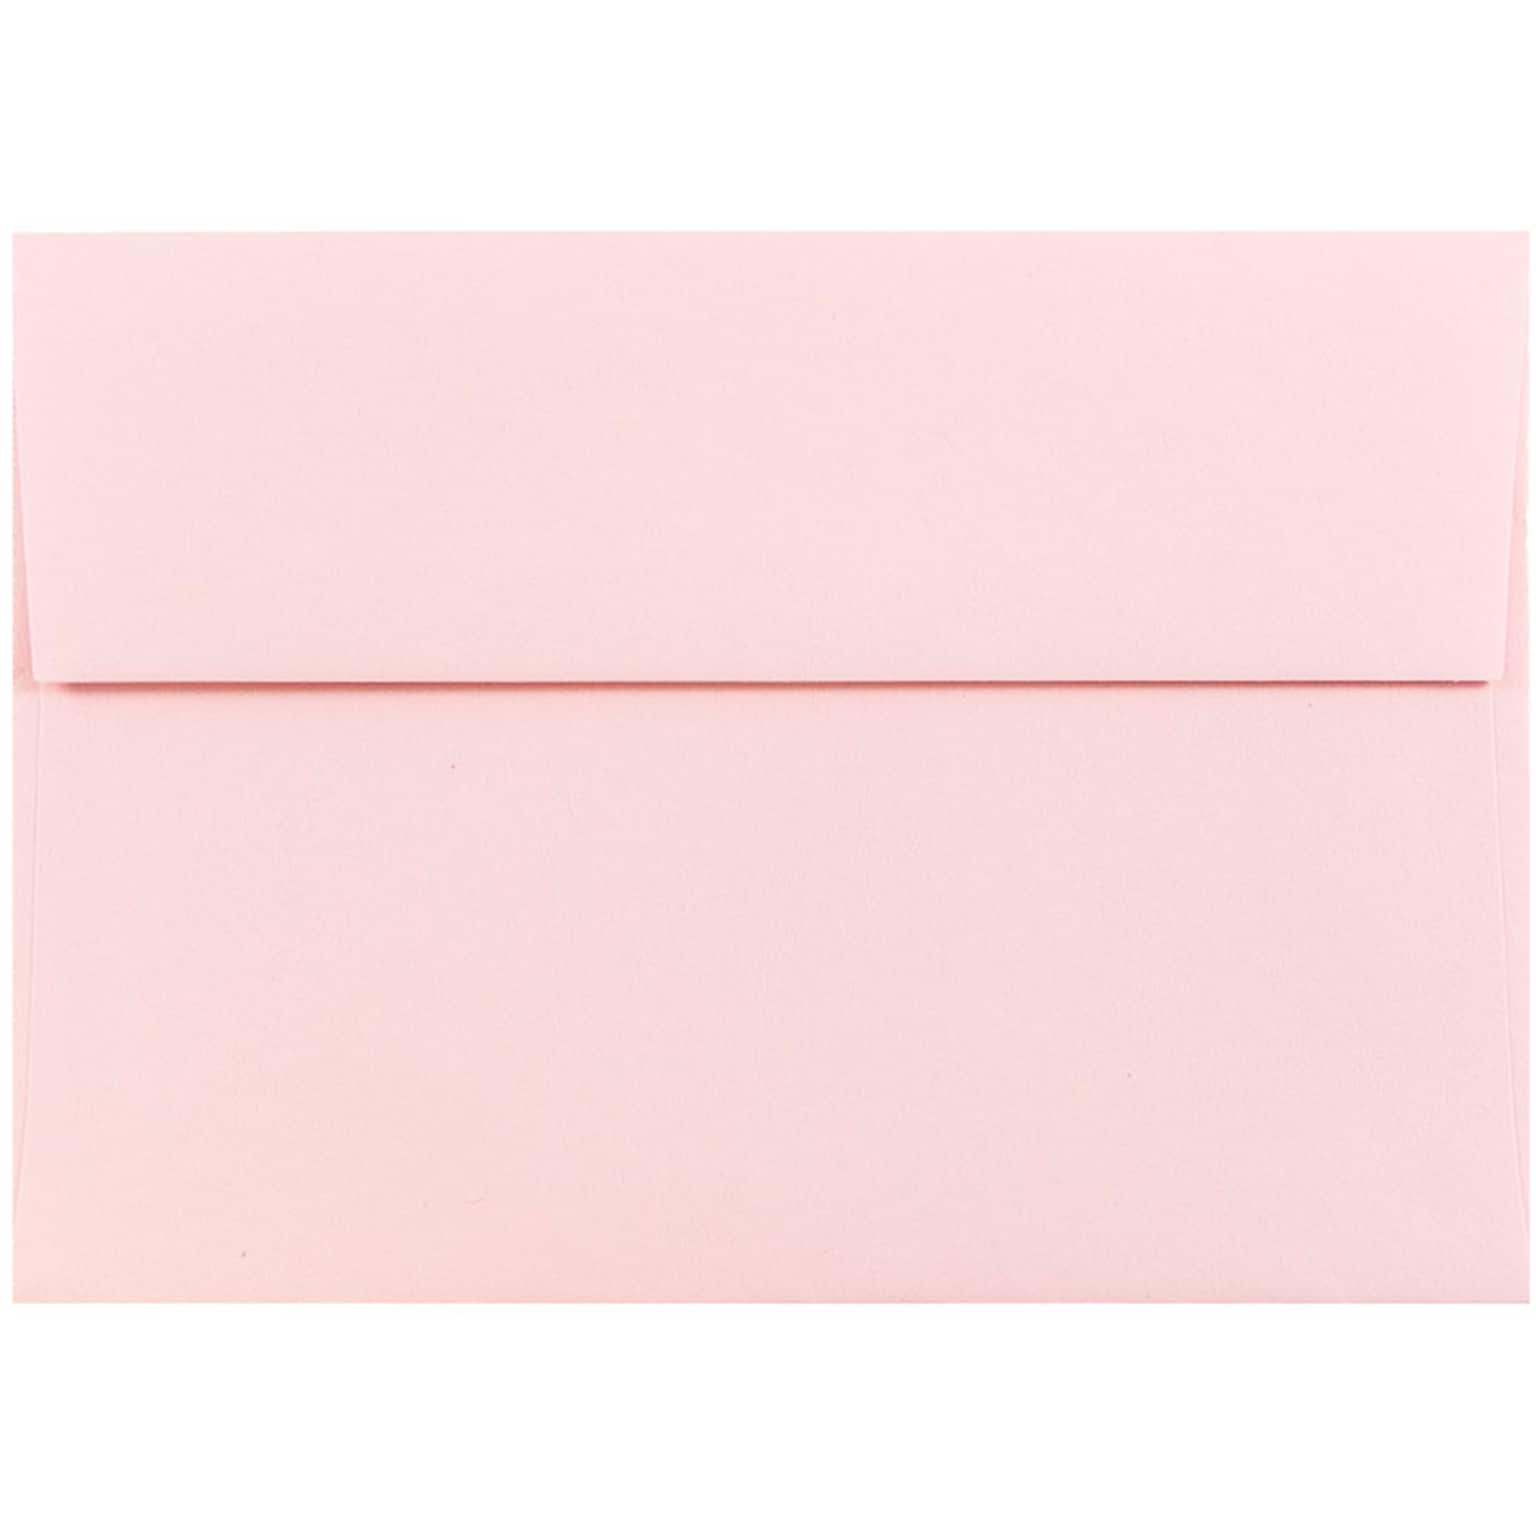 JAM Paper A7 Invitation Envelopes, 5.25 x 7.25, Baby Pink, 25/Pack (155627)